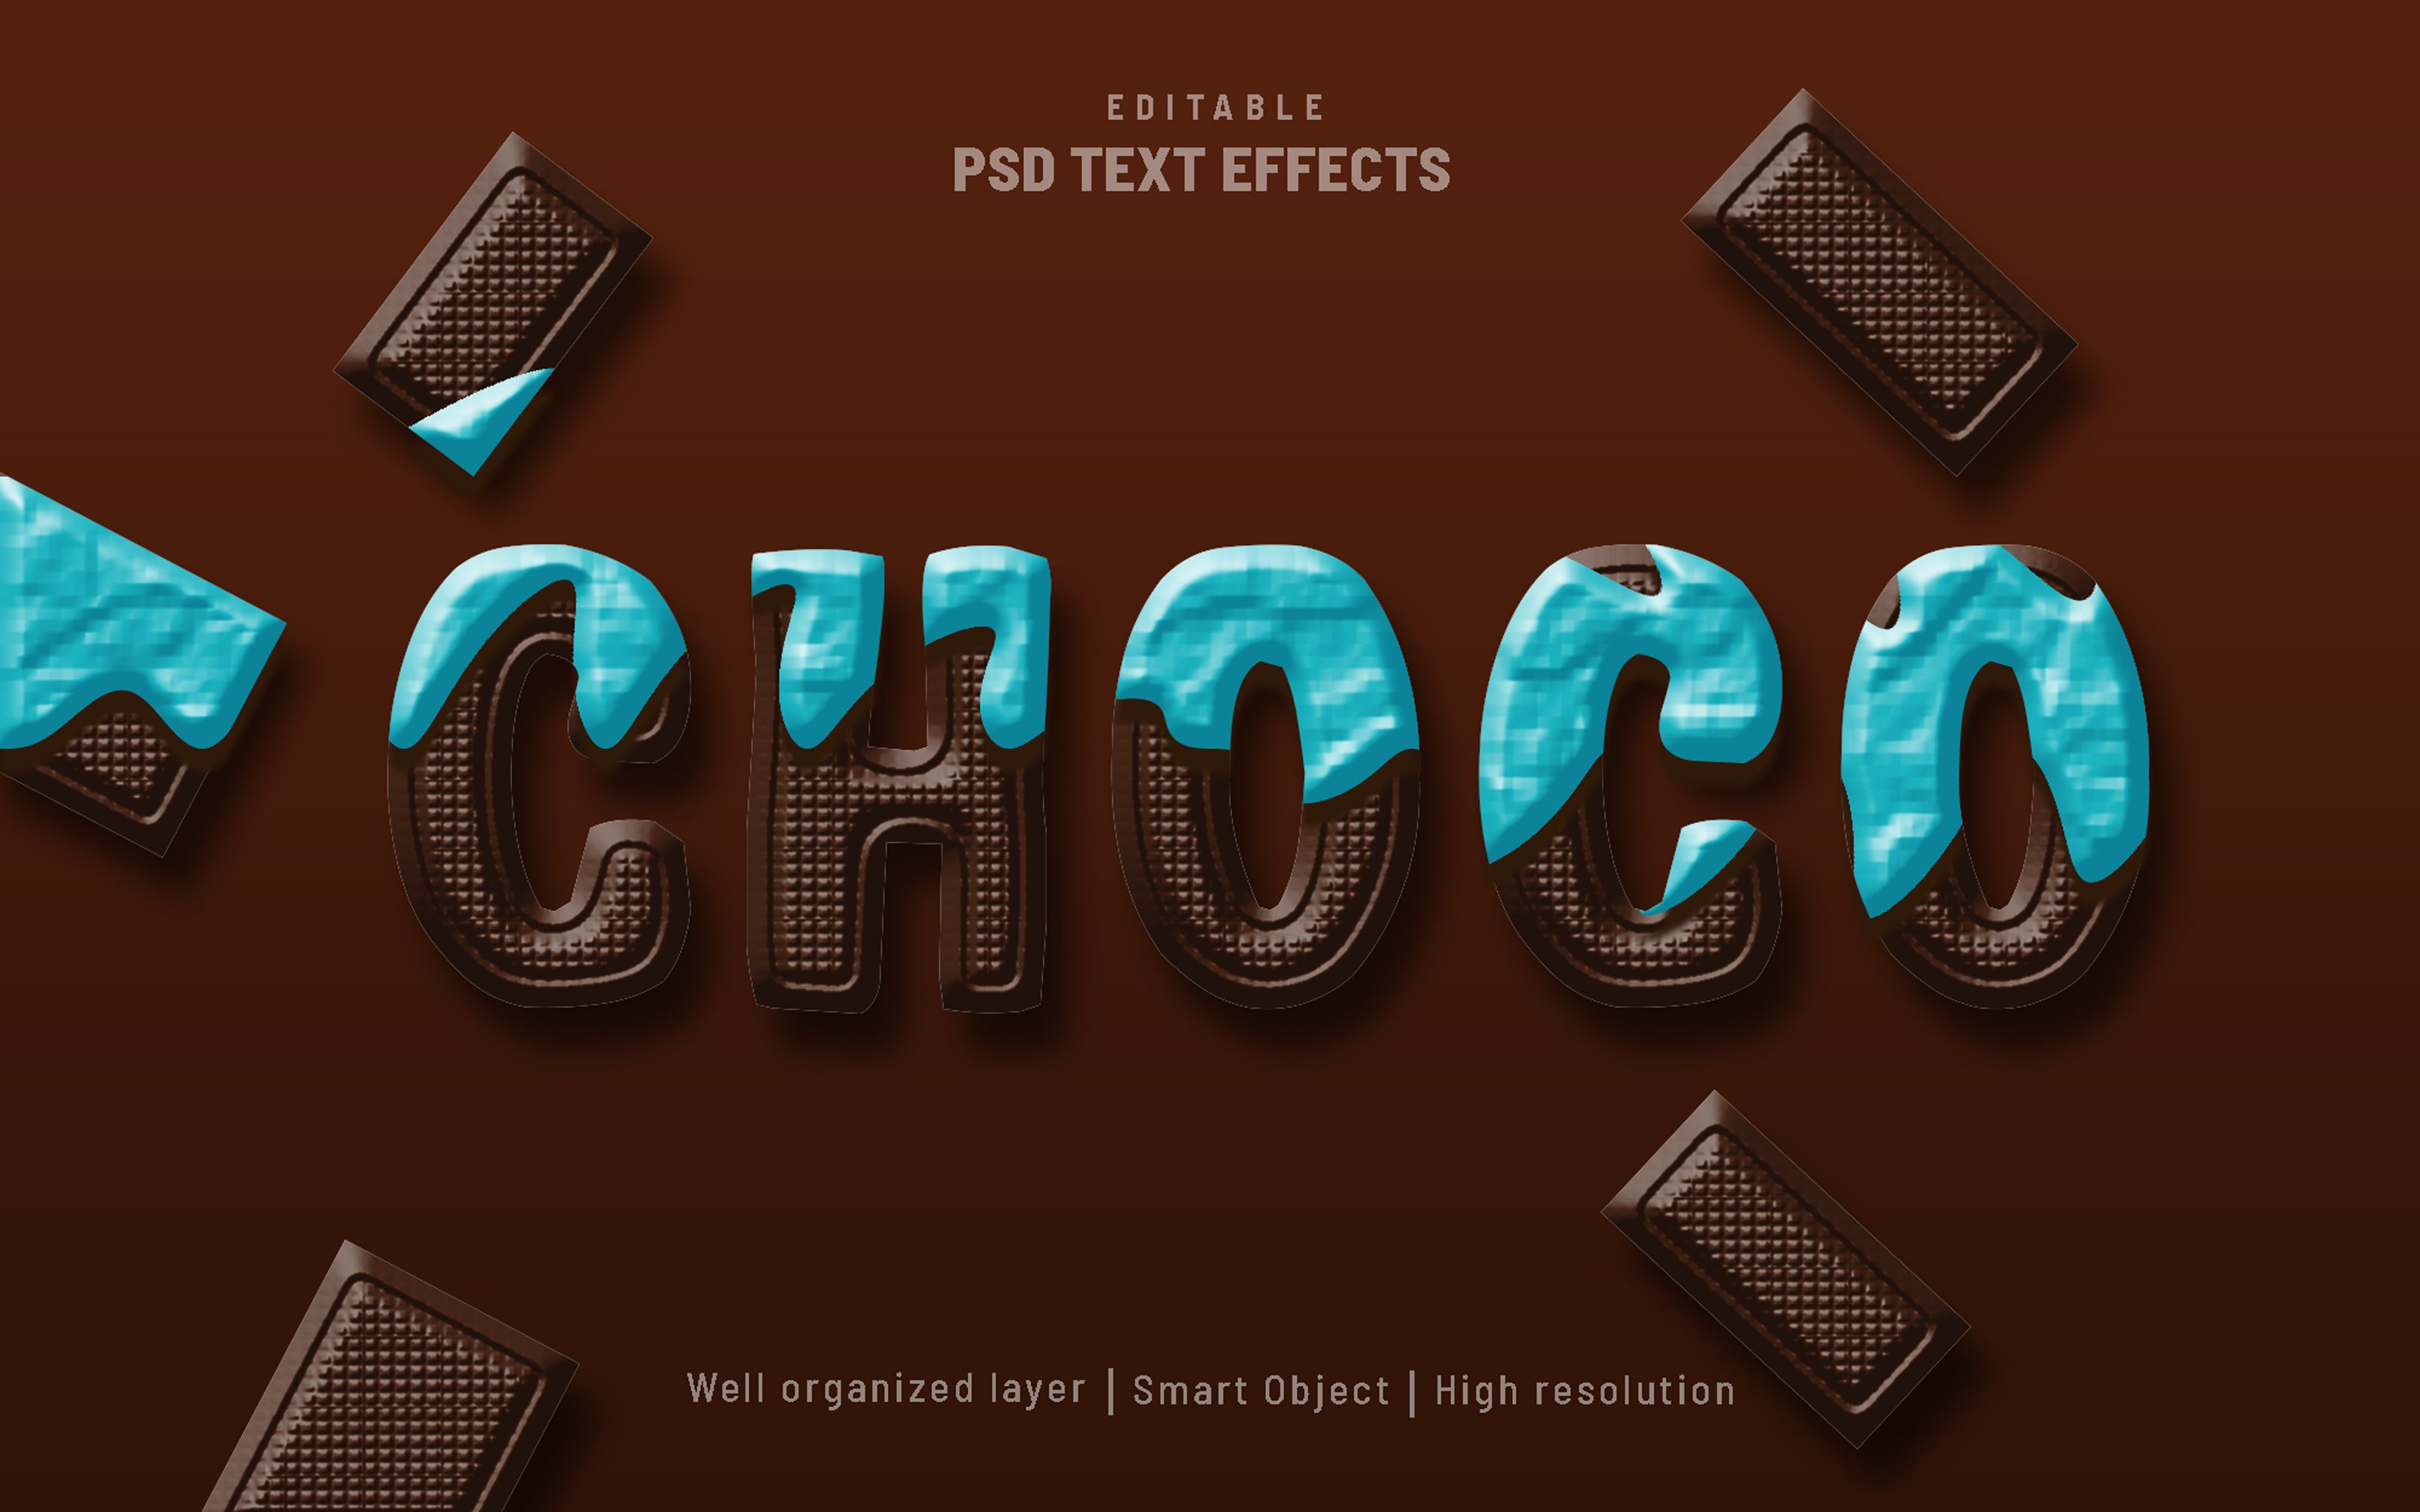 Choco chocolate editable text PSDcover image.